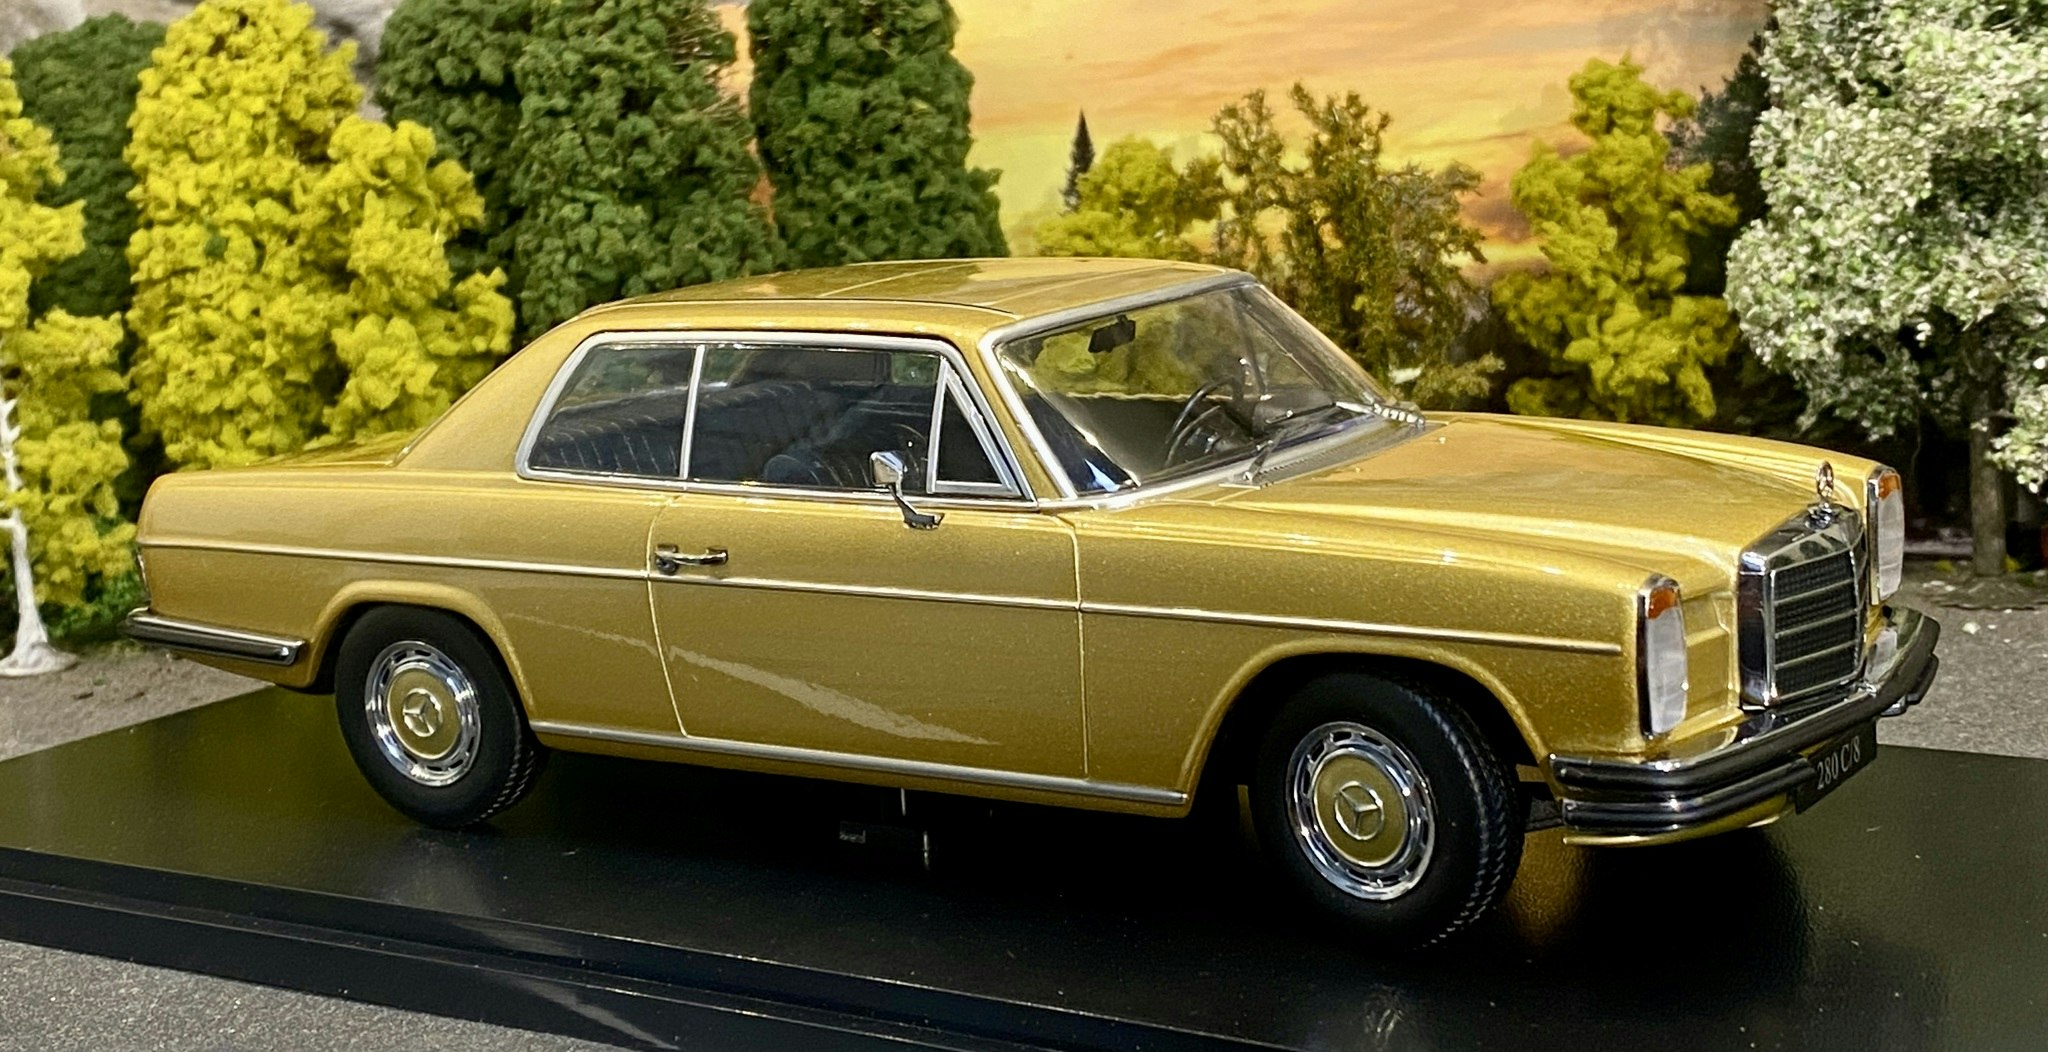 Skala 1/18 Mercedes-Benz 280C/8 Coupe (W114) 1969, Gold fr KK-Scale